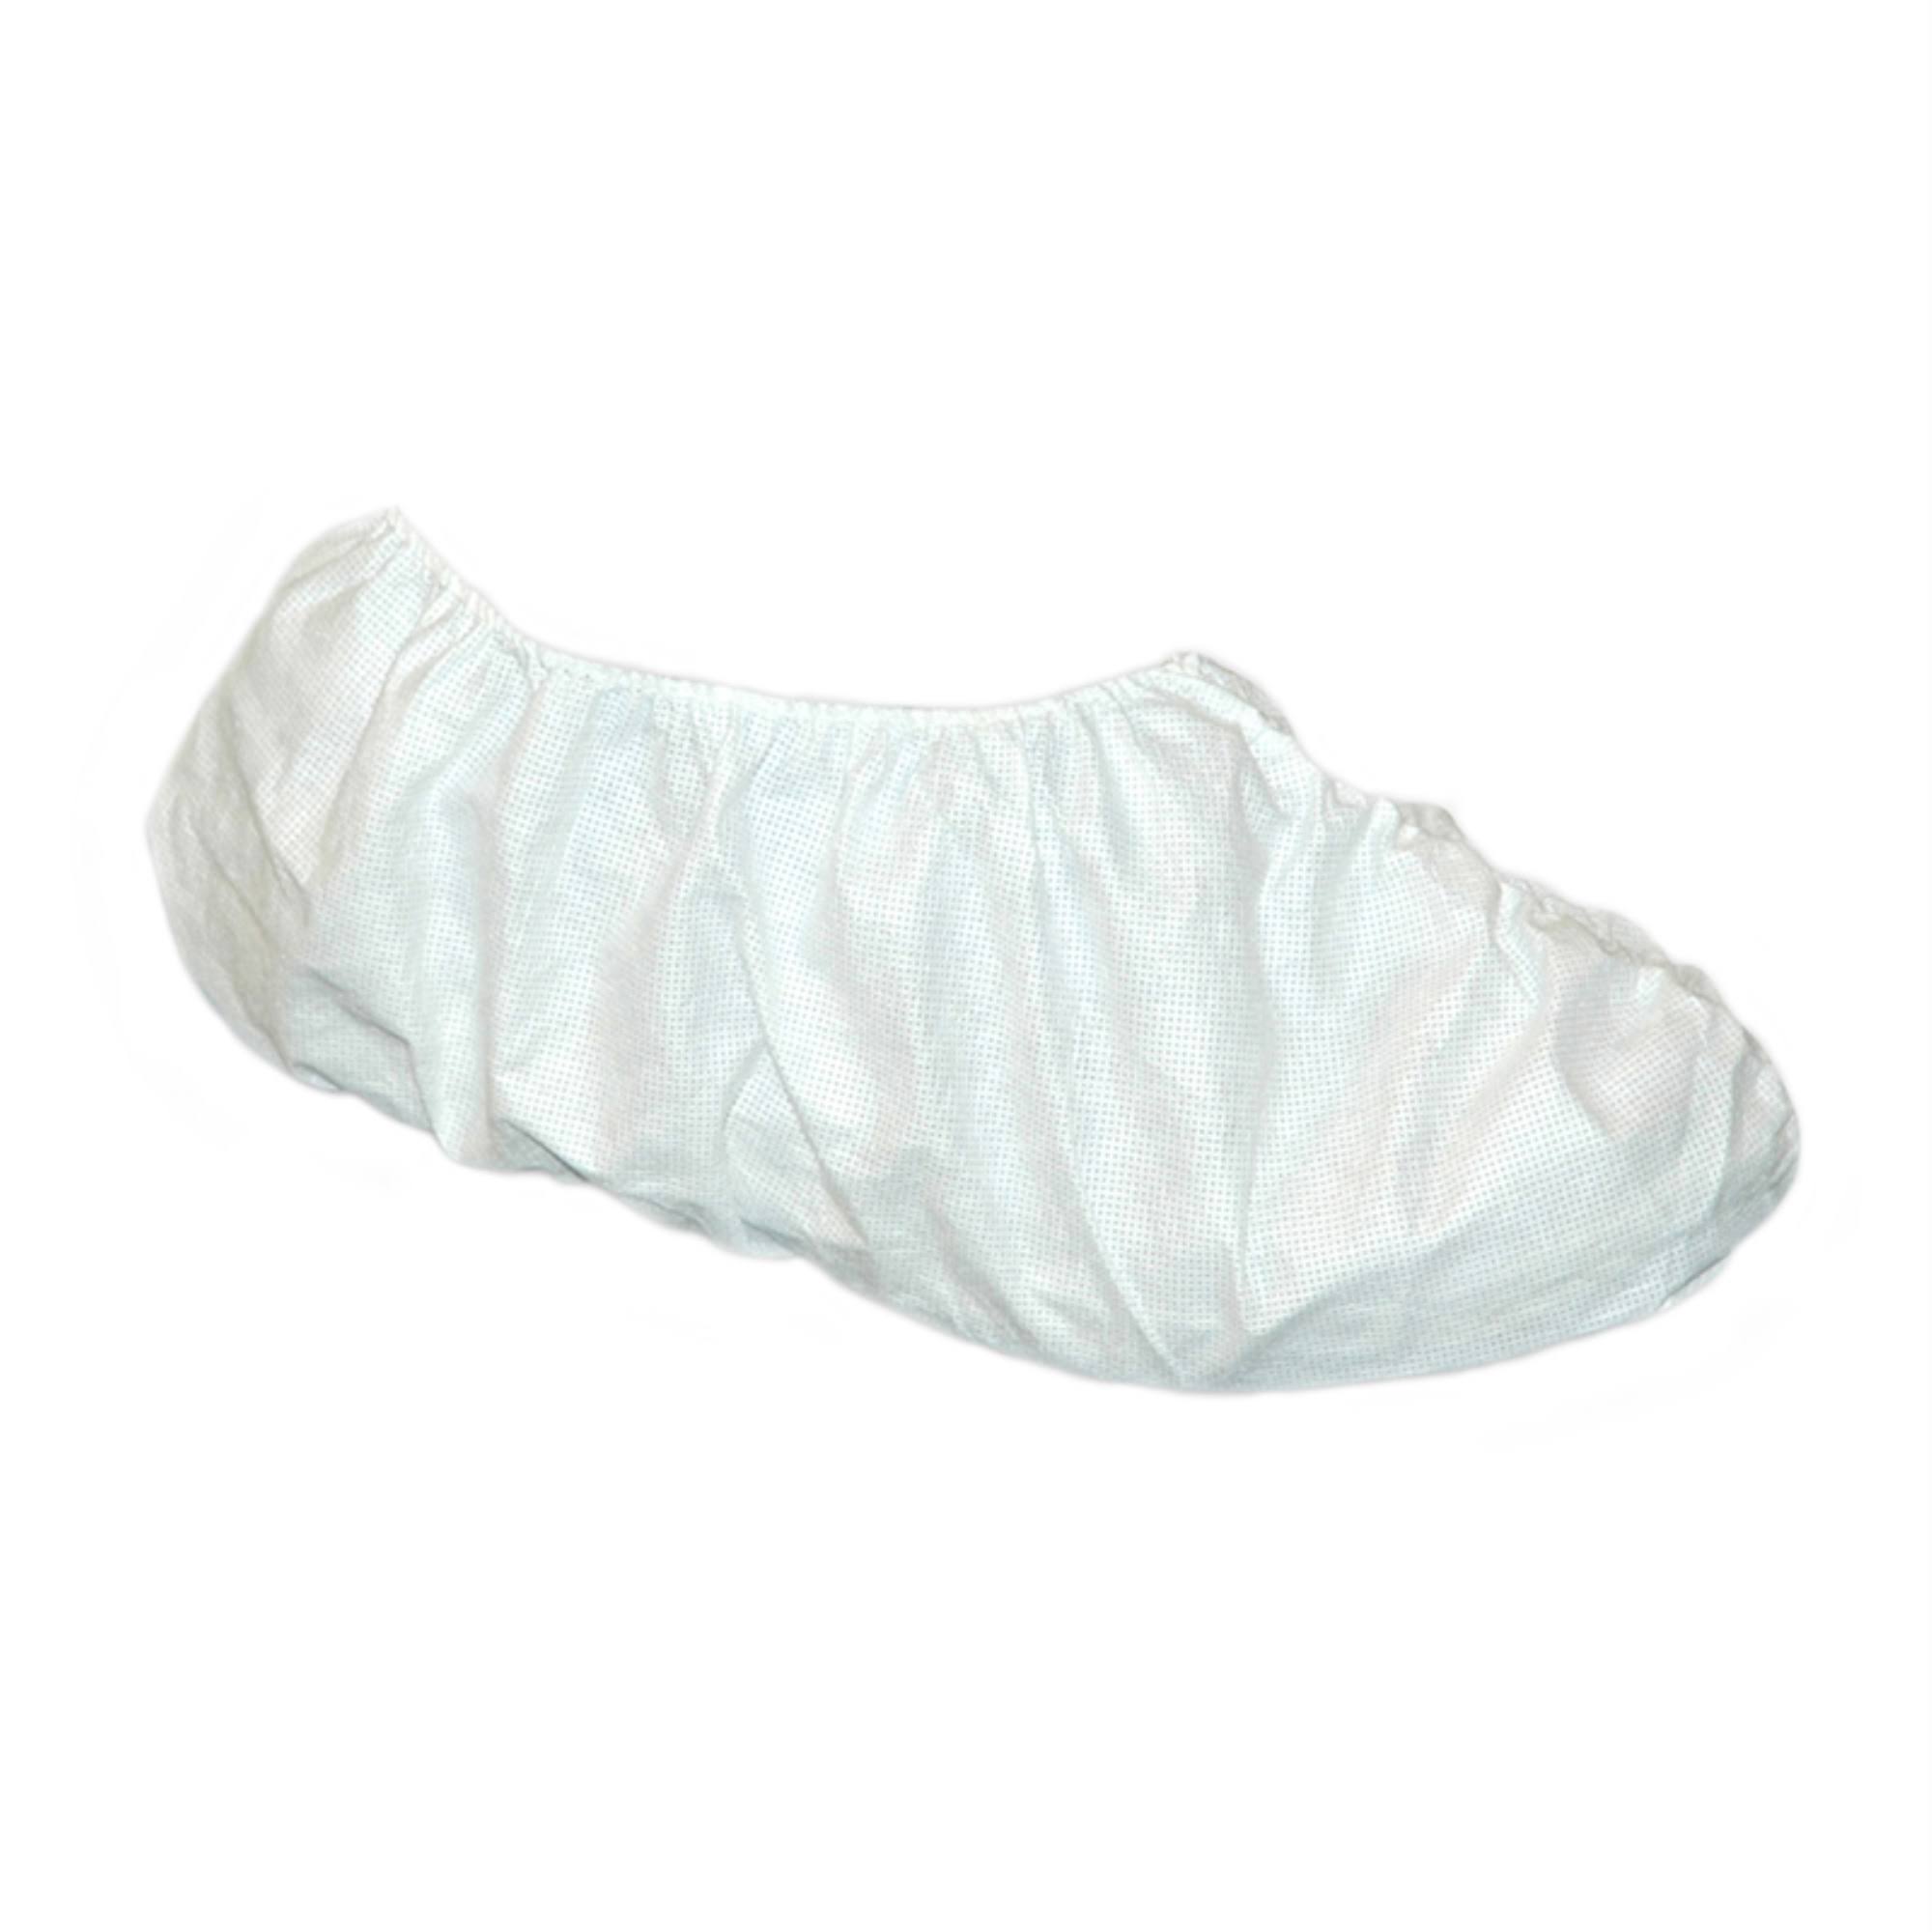 SuperTuff Shoe Guards Polypropylene White One Size Fits Most White 04510